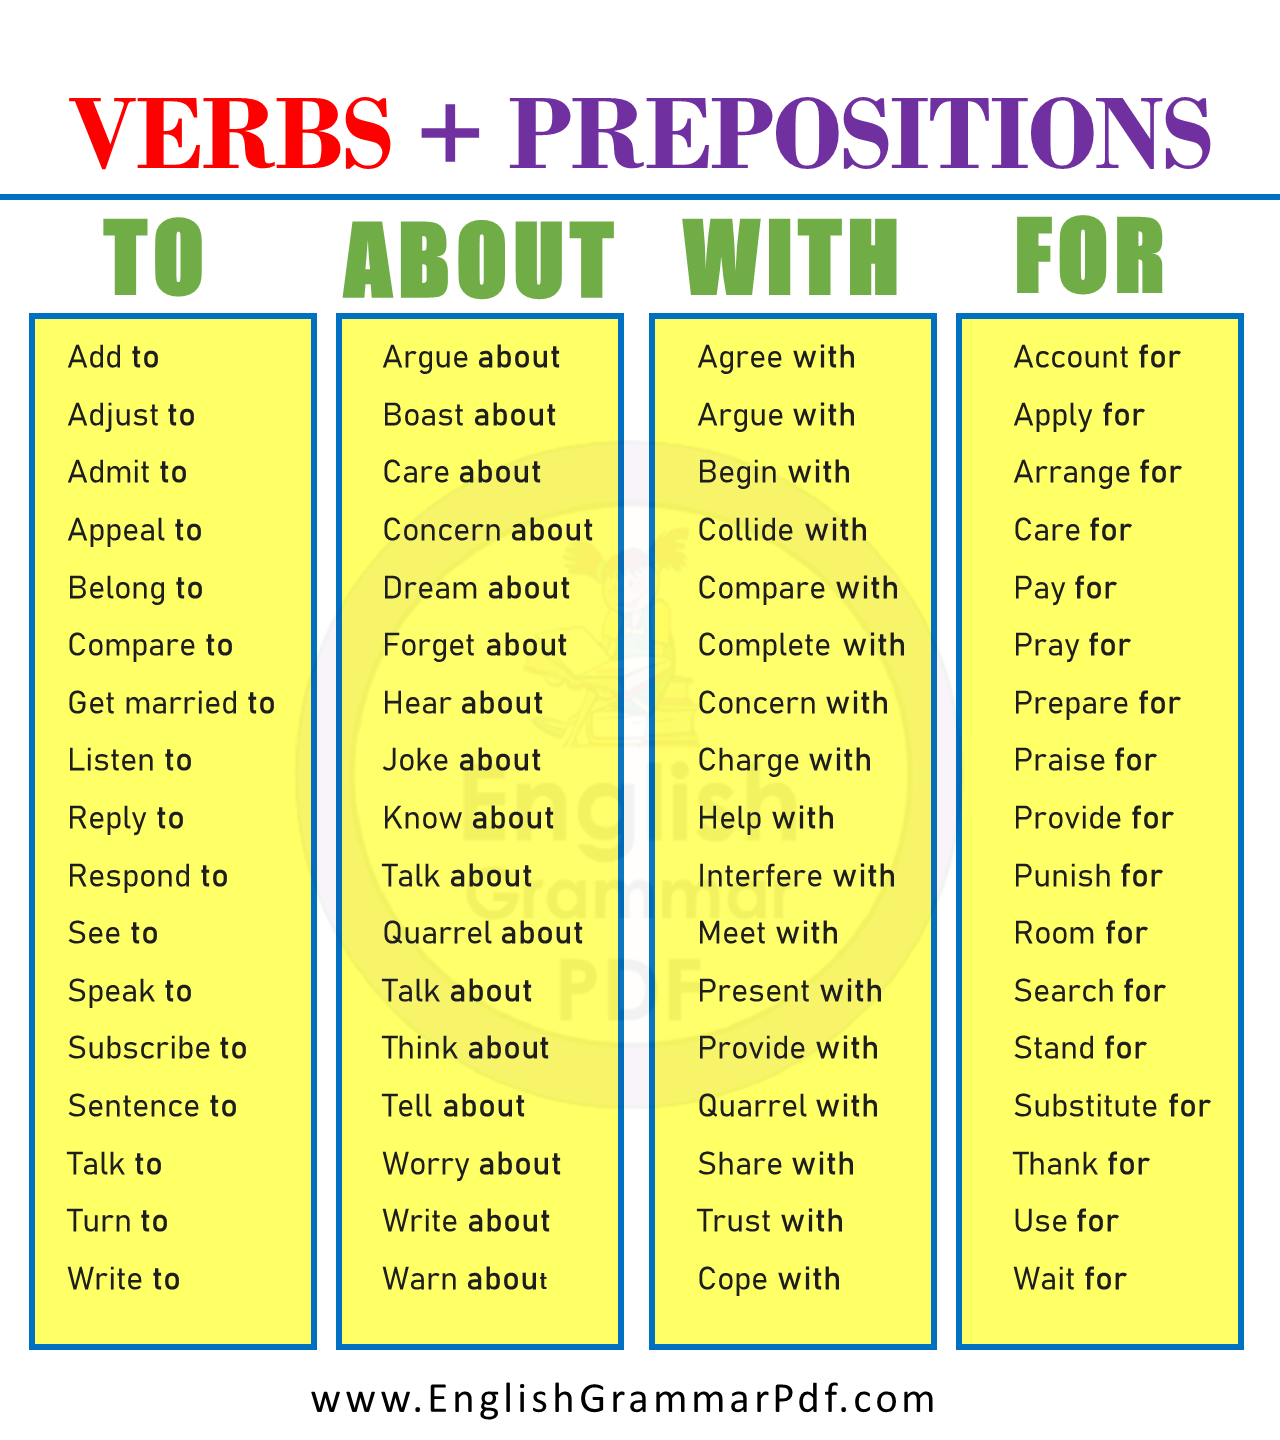 Verb Preposition Combinations